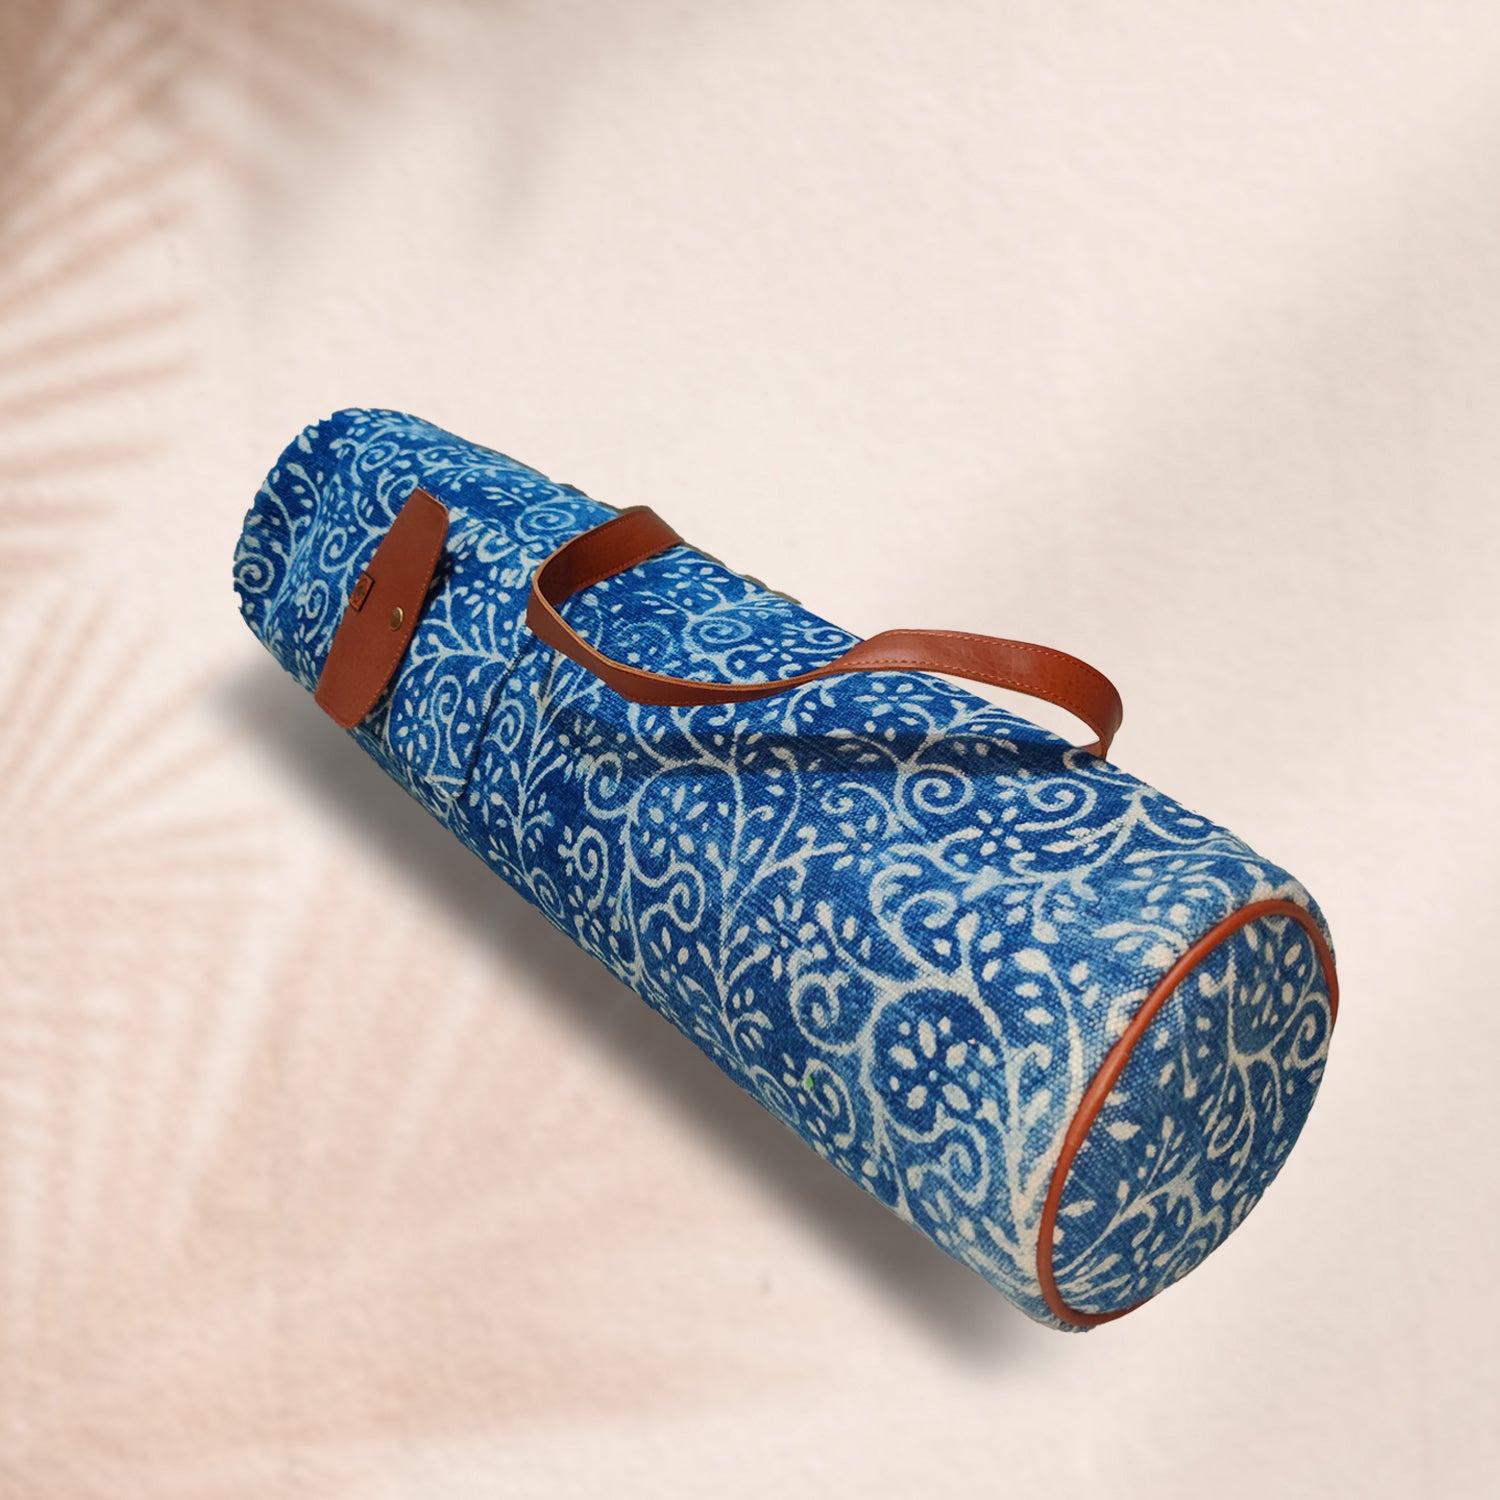 Alluring Blue 100 % Cotton Yoga Bag - 27 x 6 inches